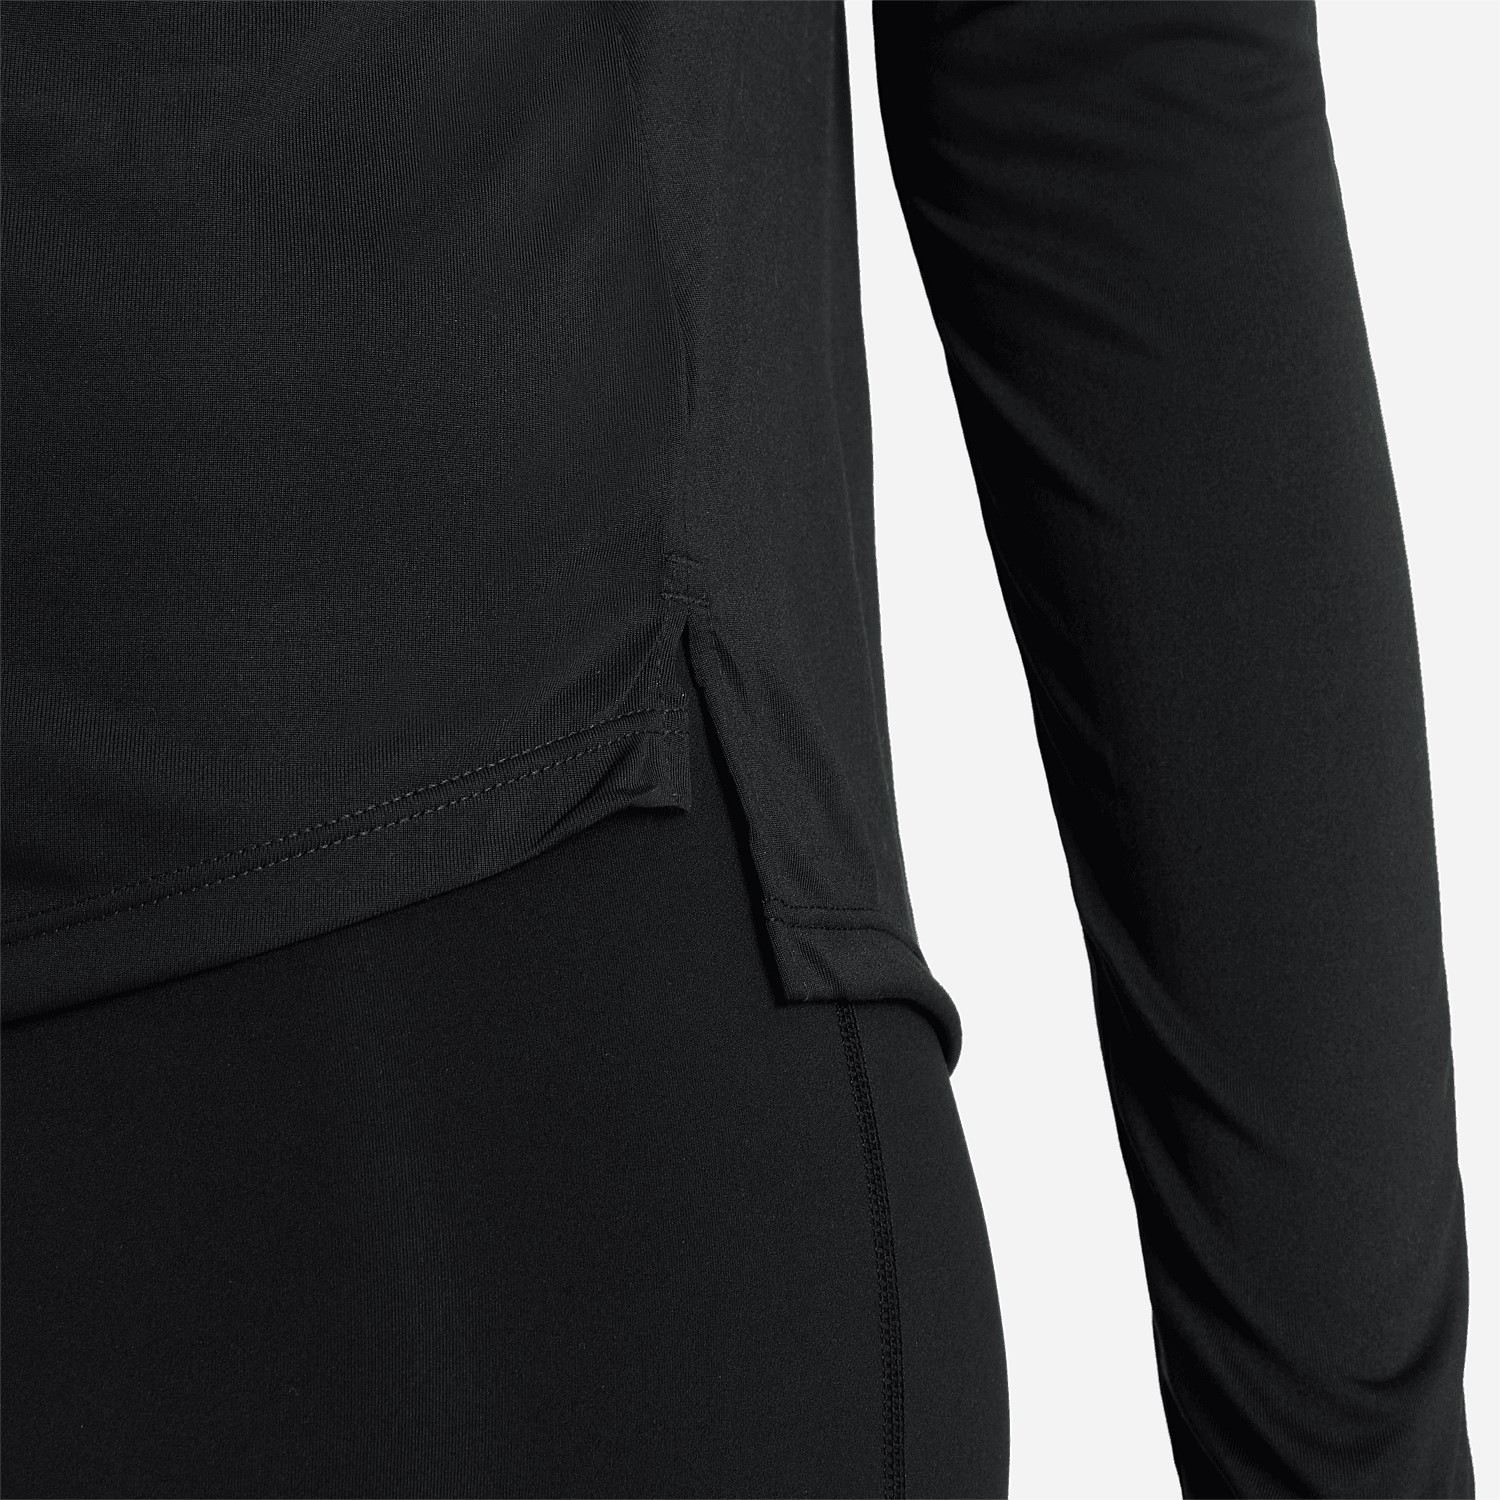 Nike Dri-FIT One Standard Fit Long Sleeve Top | Tees & Tanks | Stirling ...